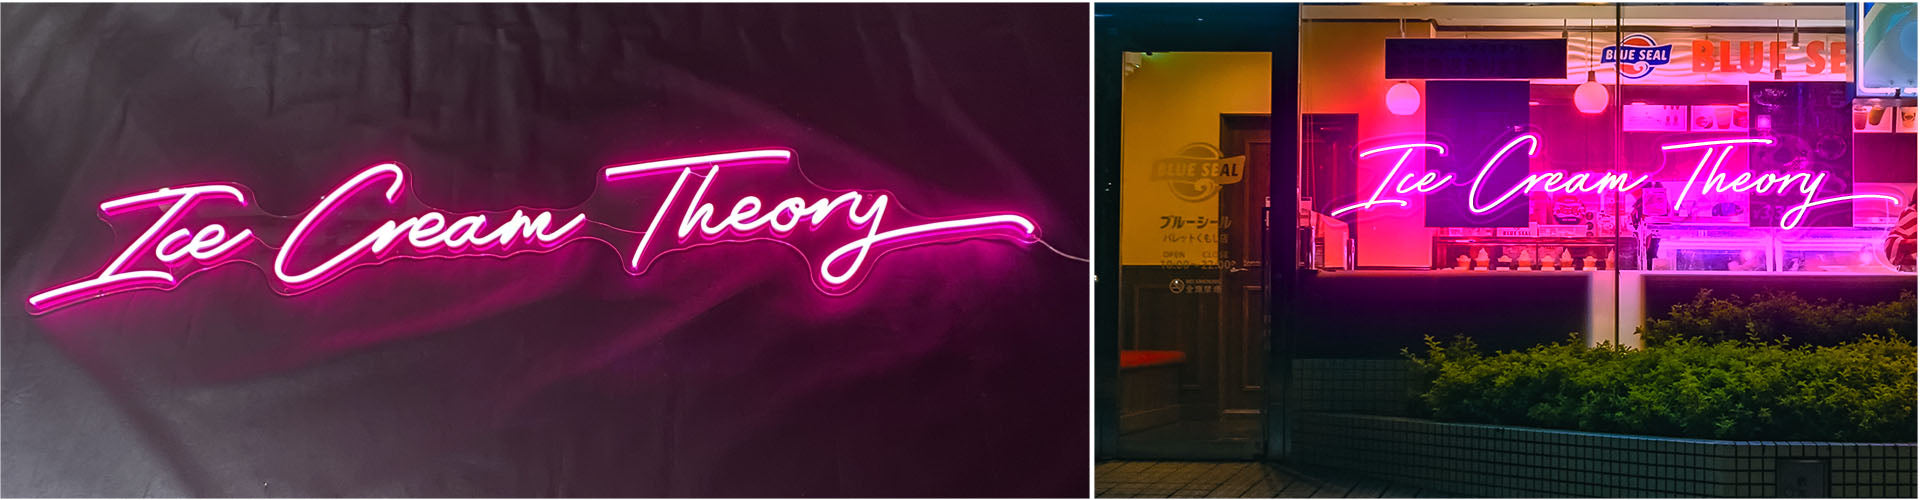 Ice cream theory neon light sign